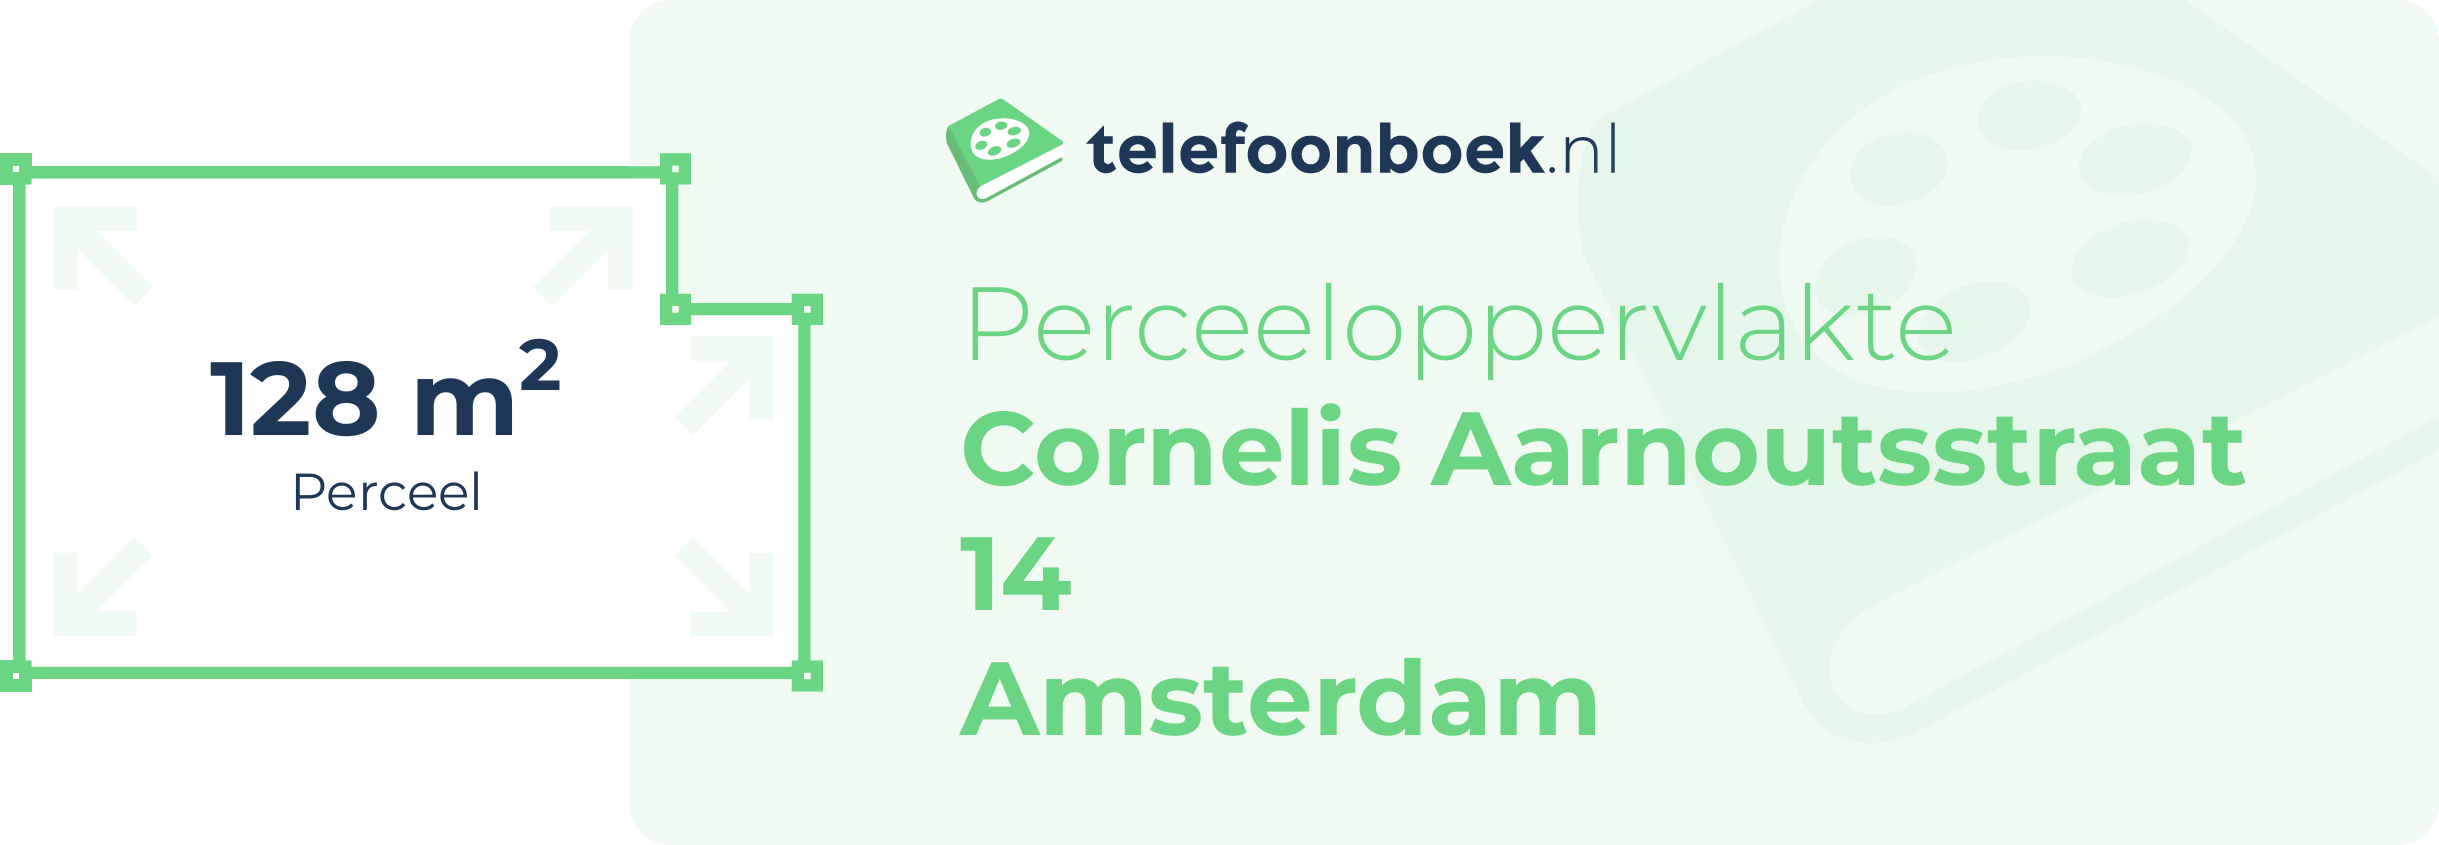 Perceeloppervlakte Cornelis Aarnoutsstraat 14 Amsterdam